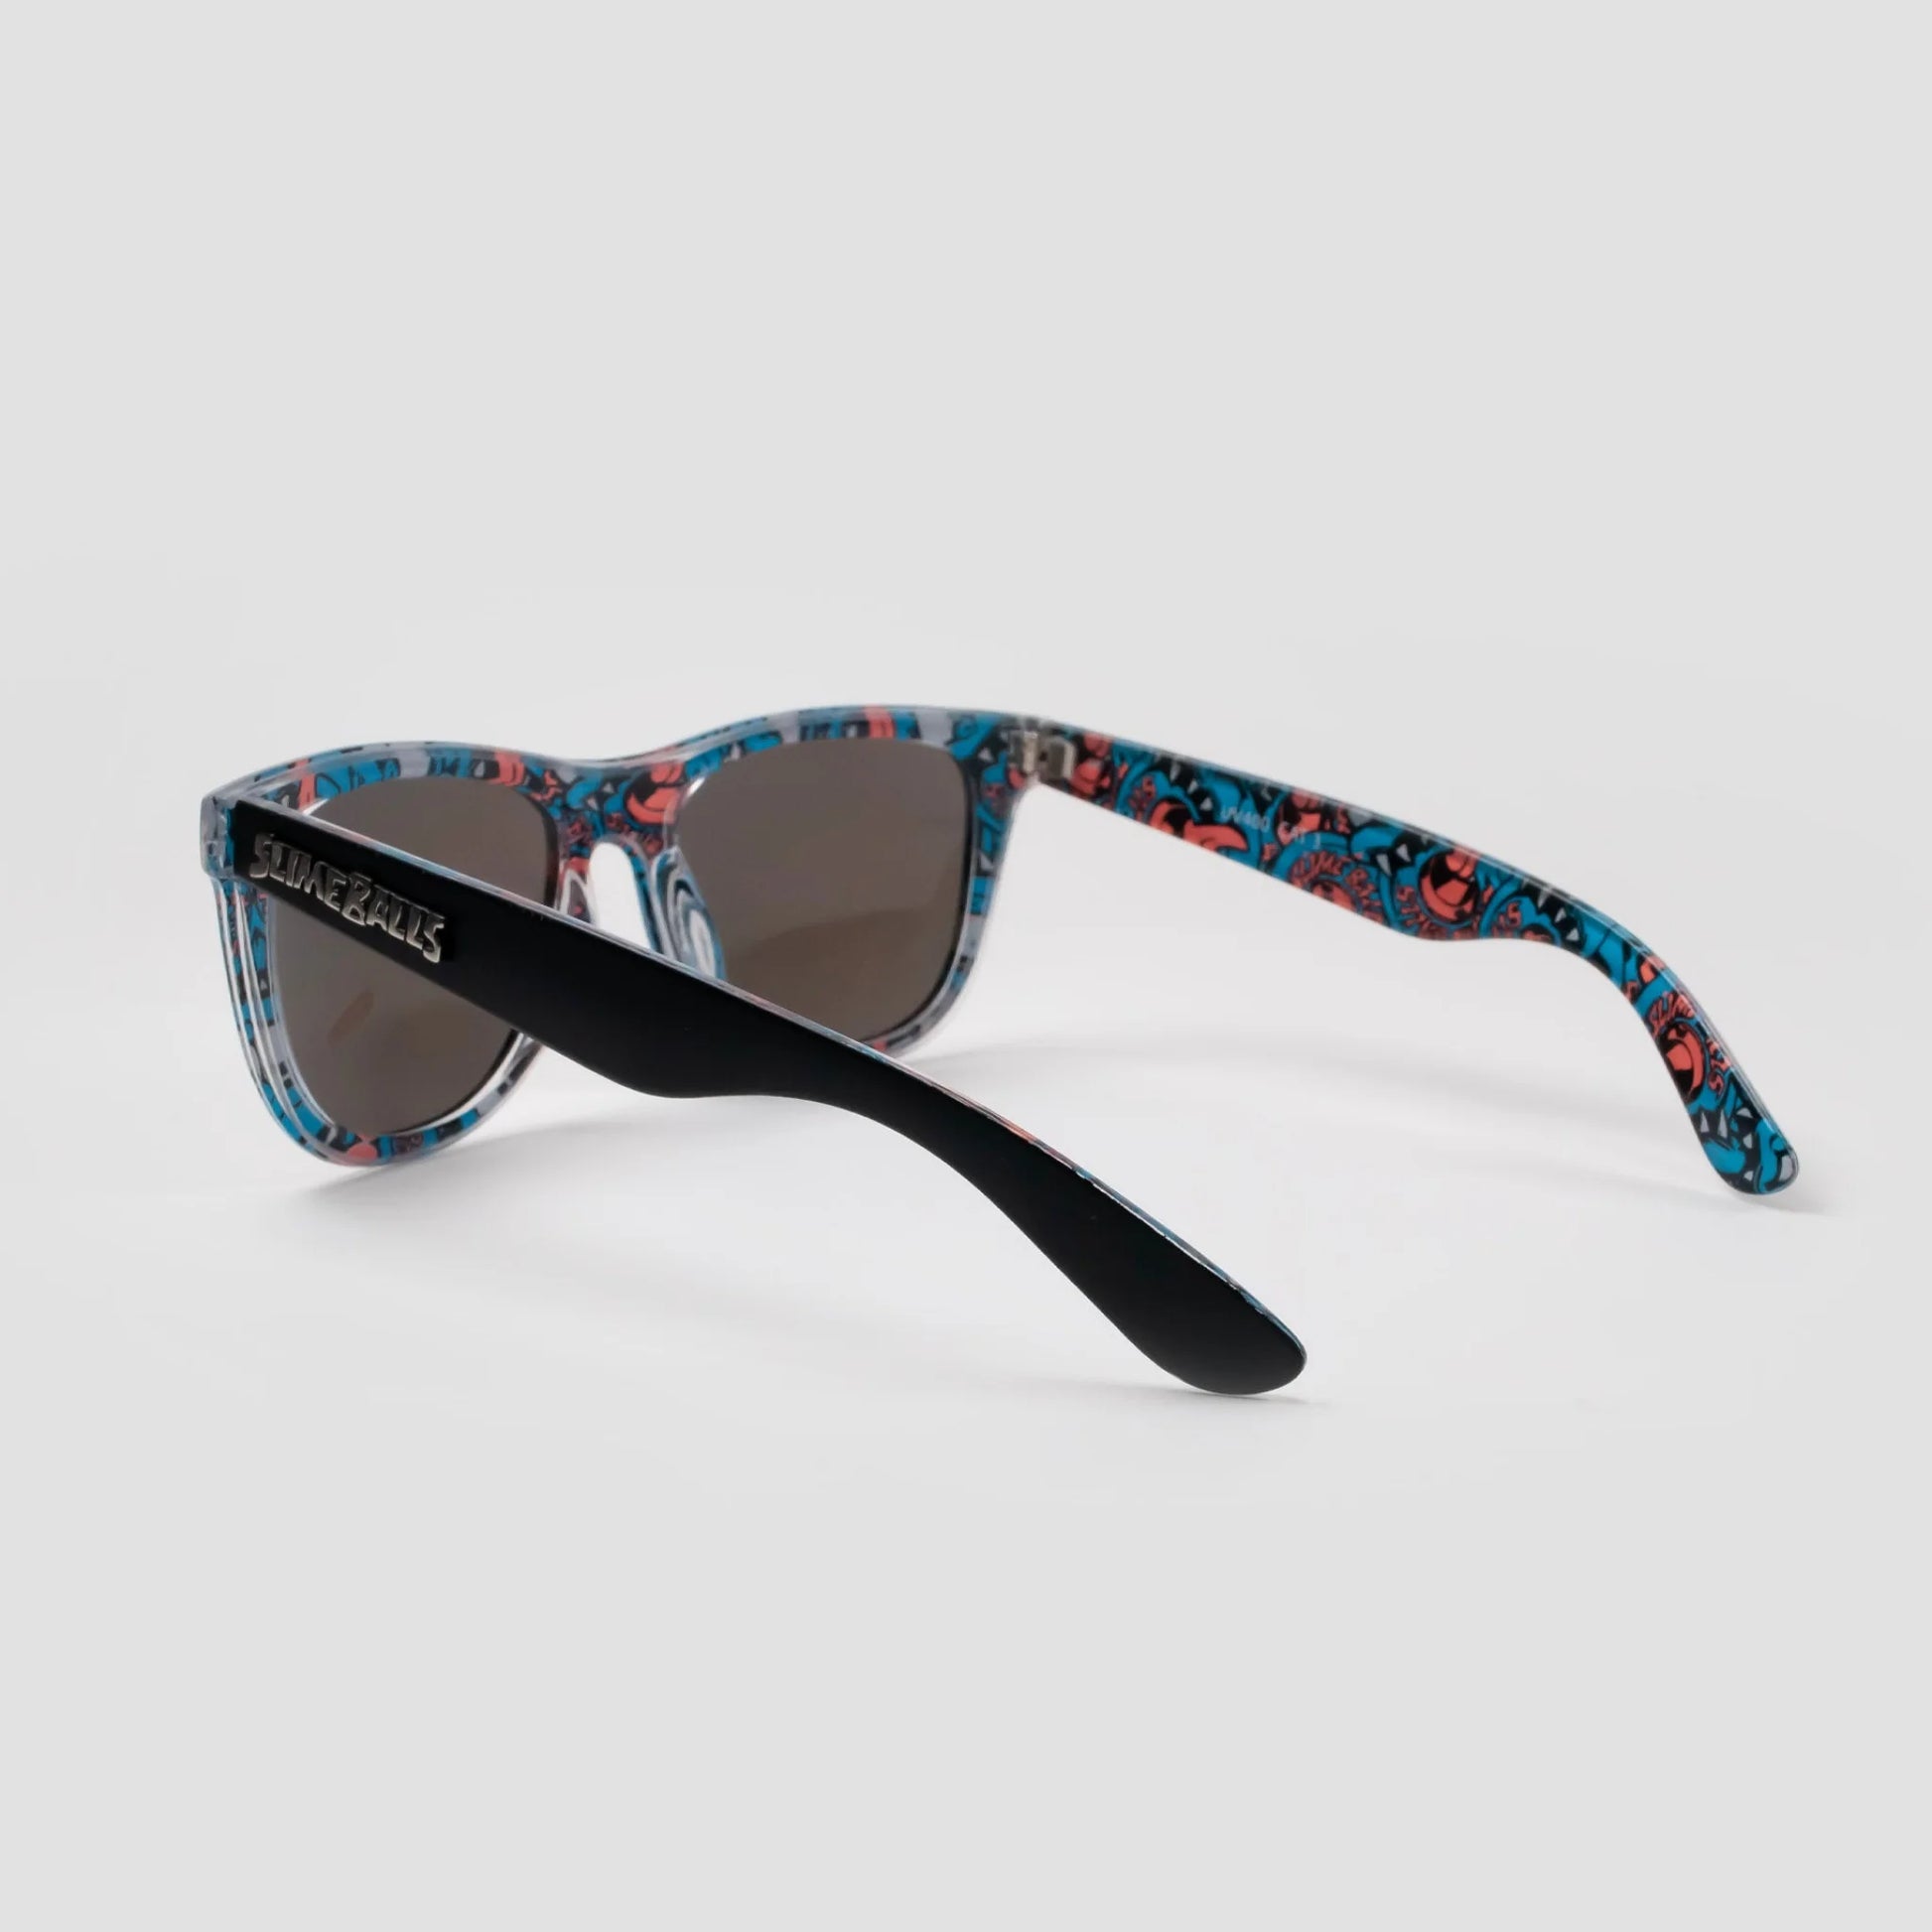 Santa Cruz SB Insider Sunglasses - Black/Blue - Prime Delux Store